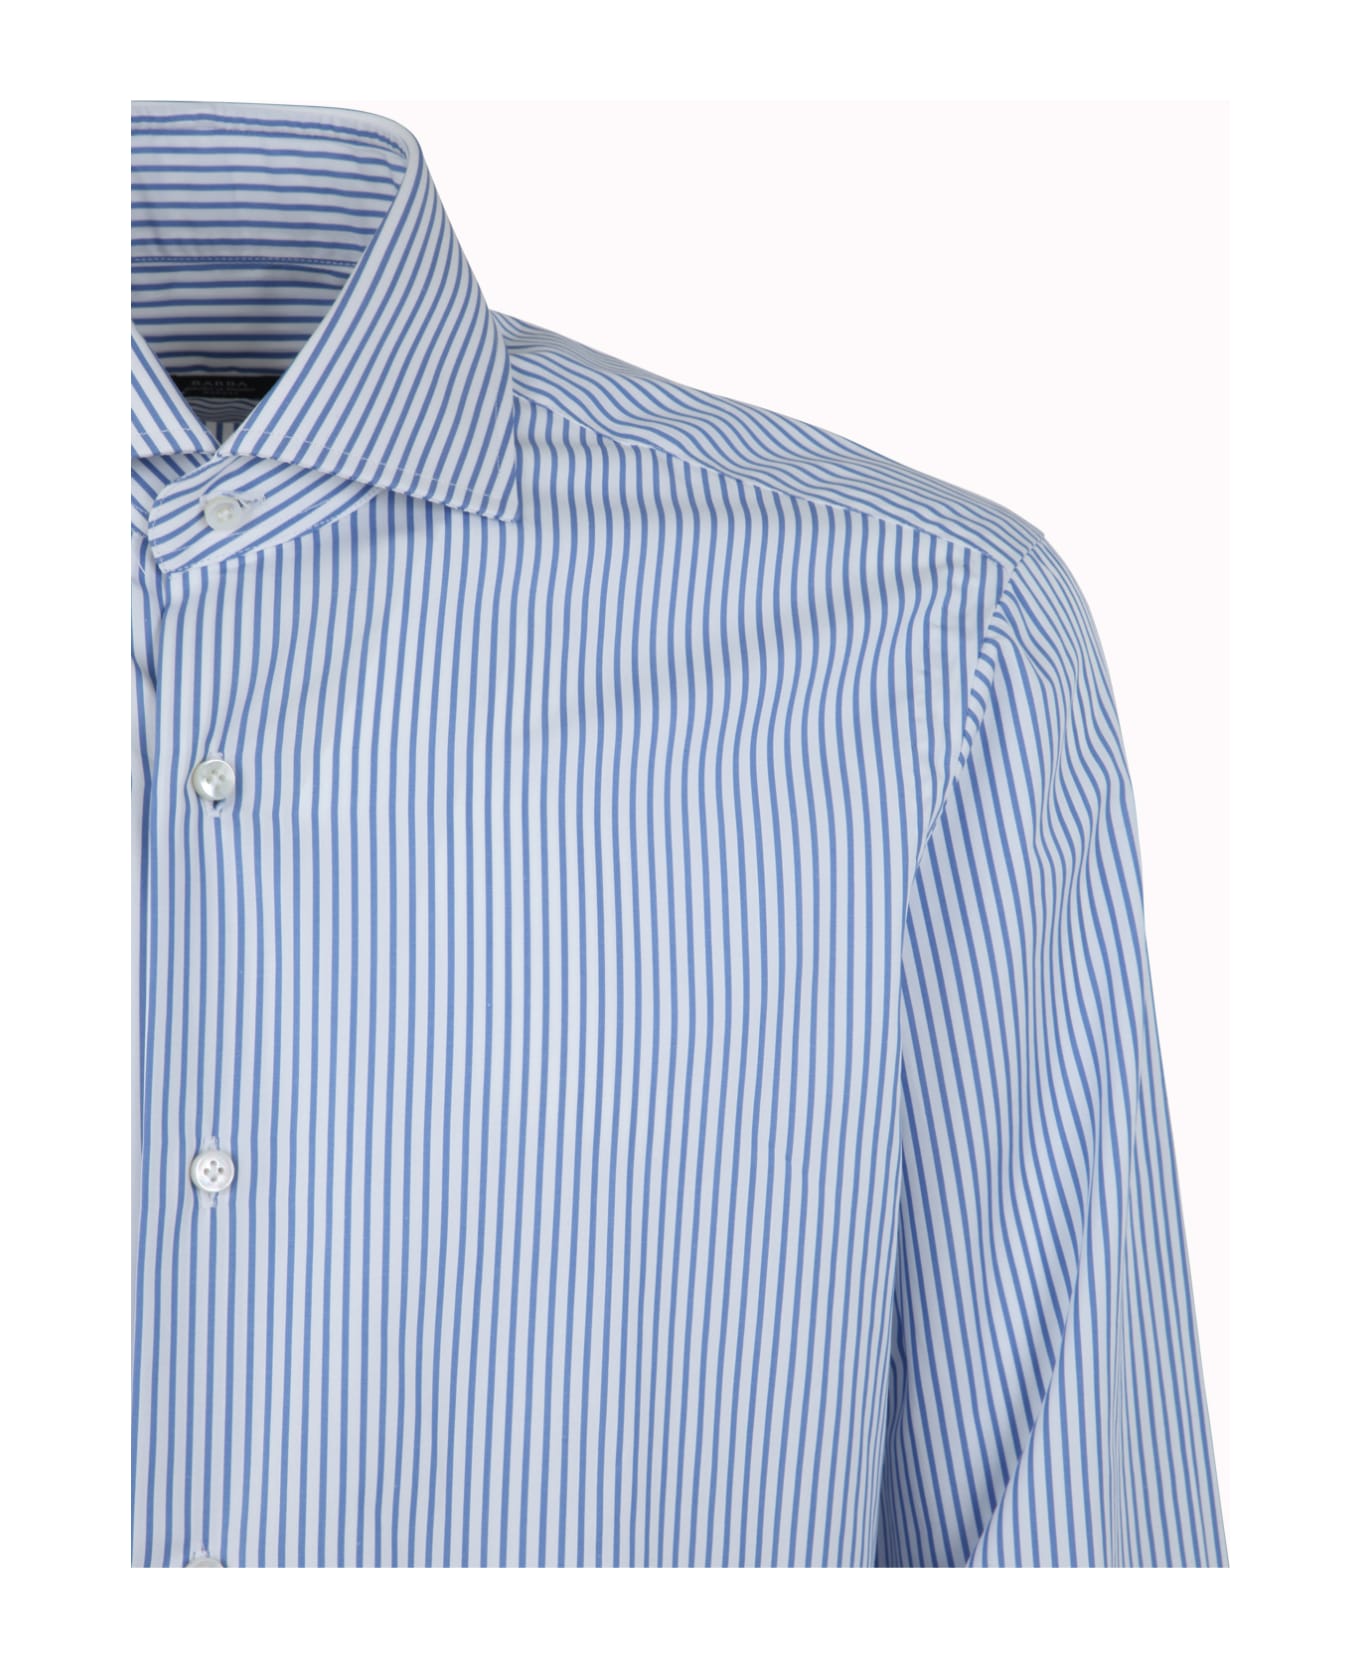 Barba Napoli Small Stripe Shirt - White Light Blue シャツ